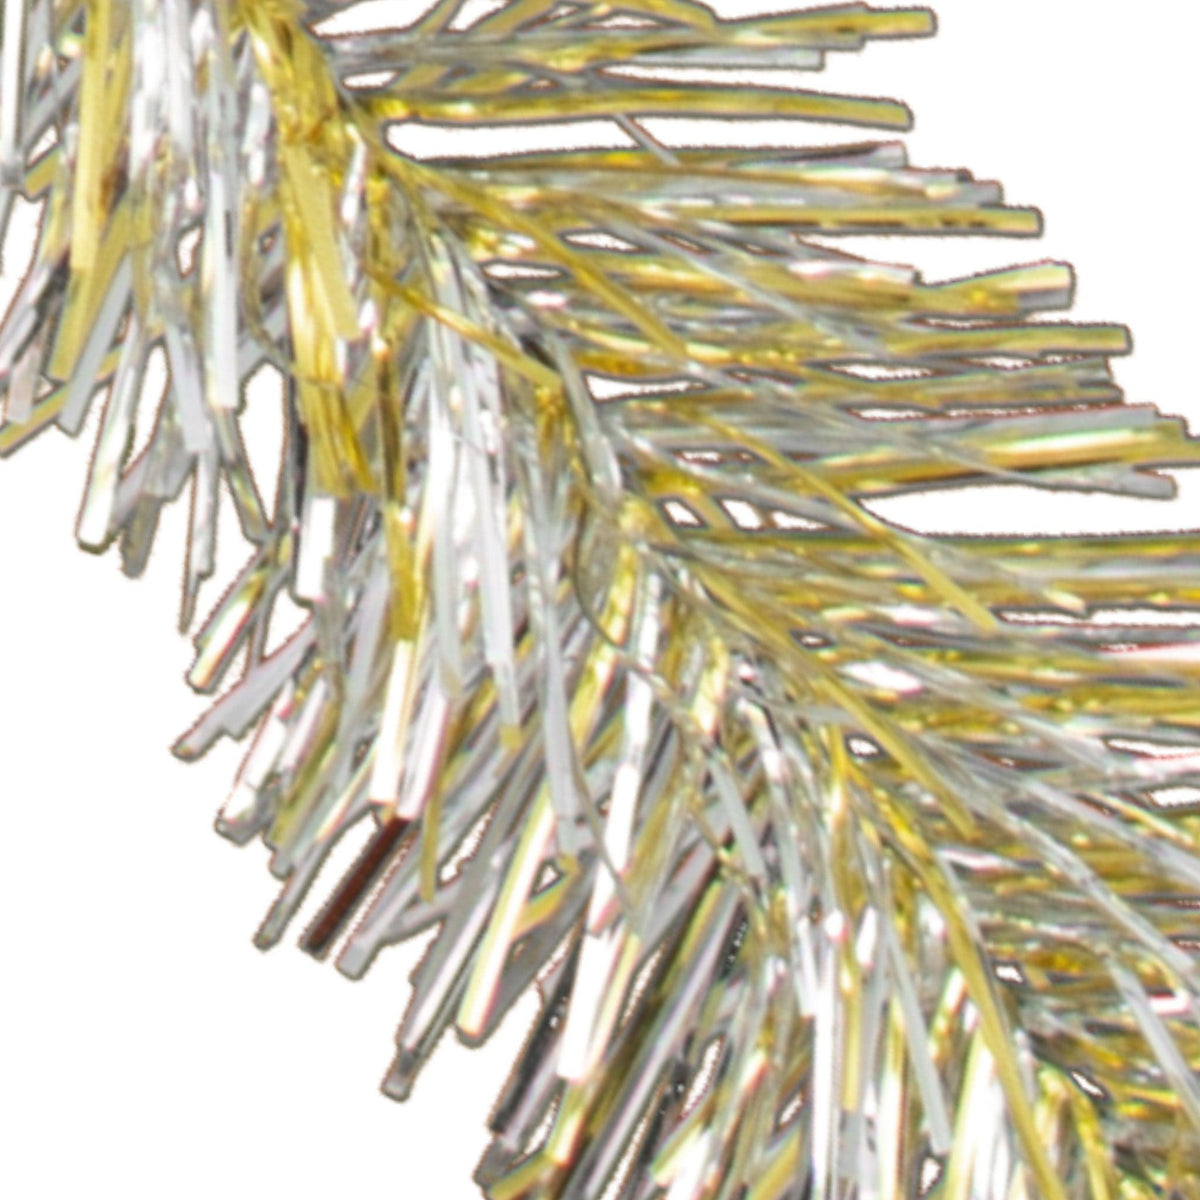 Lee Display's brand new 25ft Gold & Silver Tinsel Garlands and Fringe Embellishments on sale at leedisplay.com